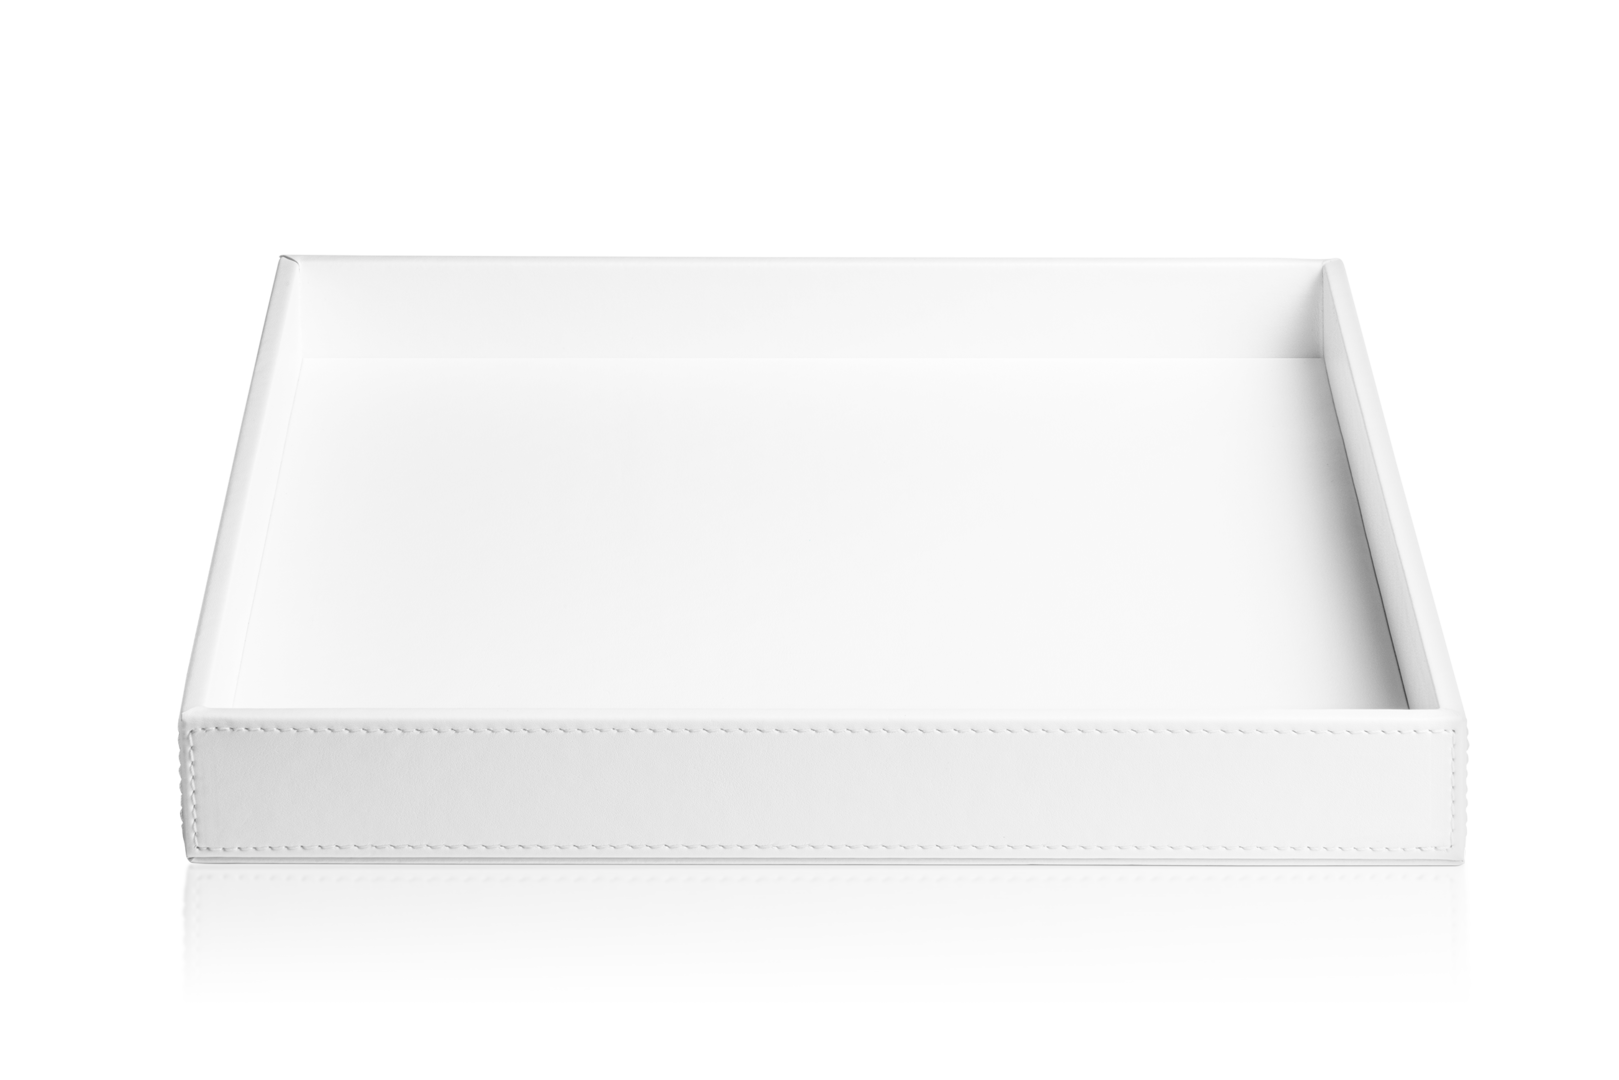 Tab Q Brownie - Multi Purpose Shelf / Tray - Artificial Leather - White